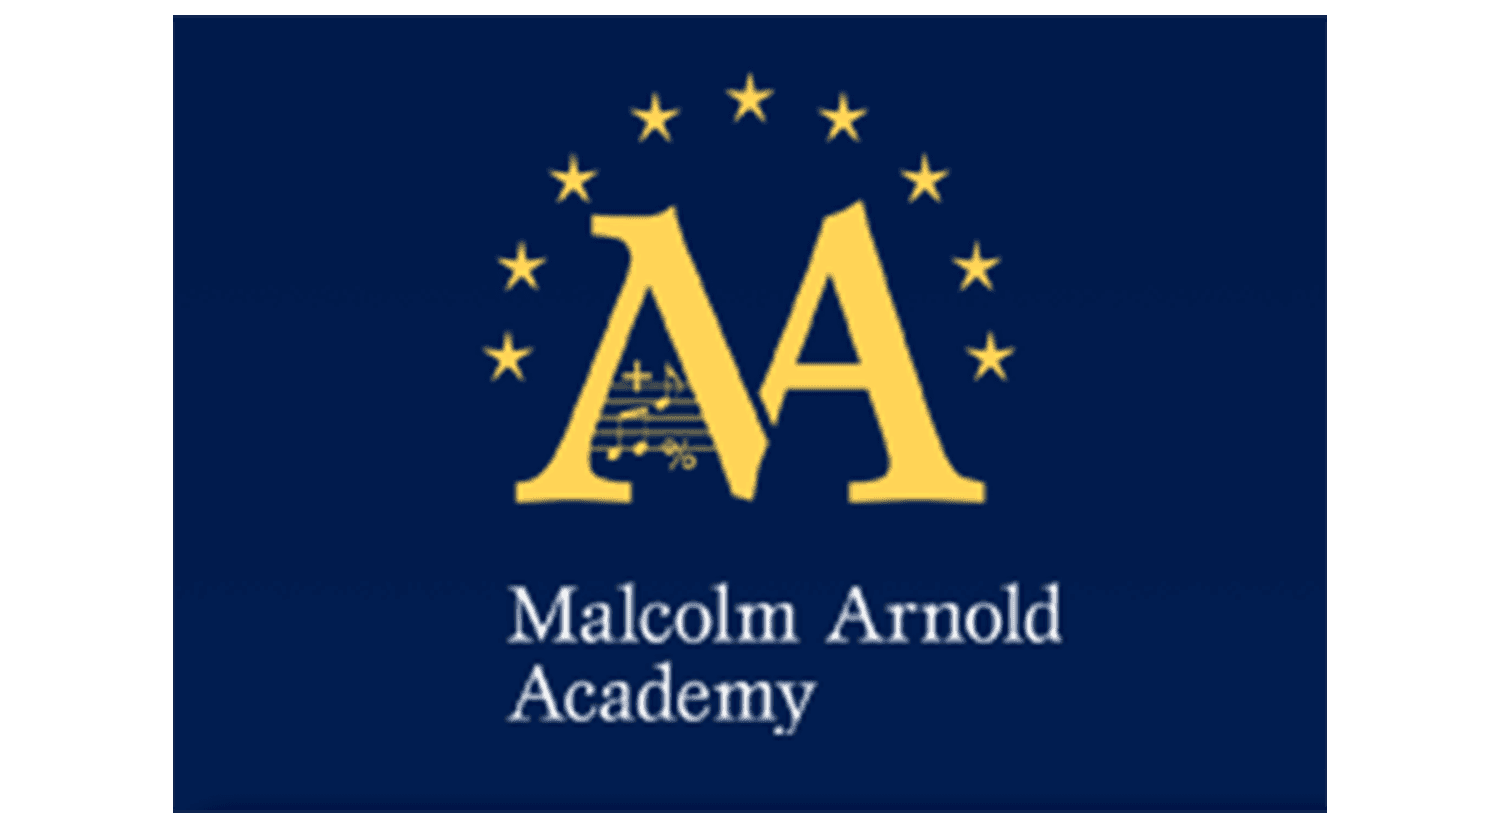 Malcolm Arnold Academy | Northampton Saints Community Partner School